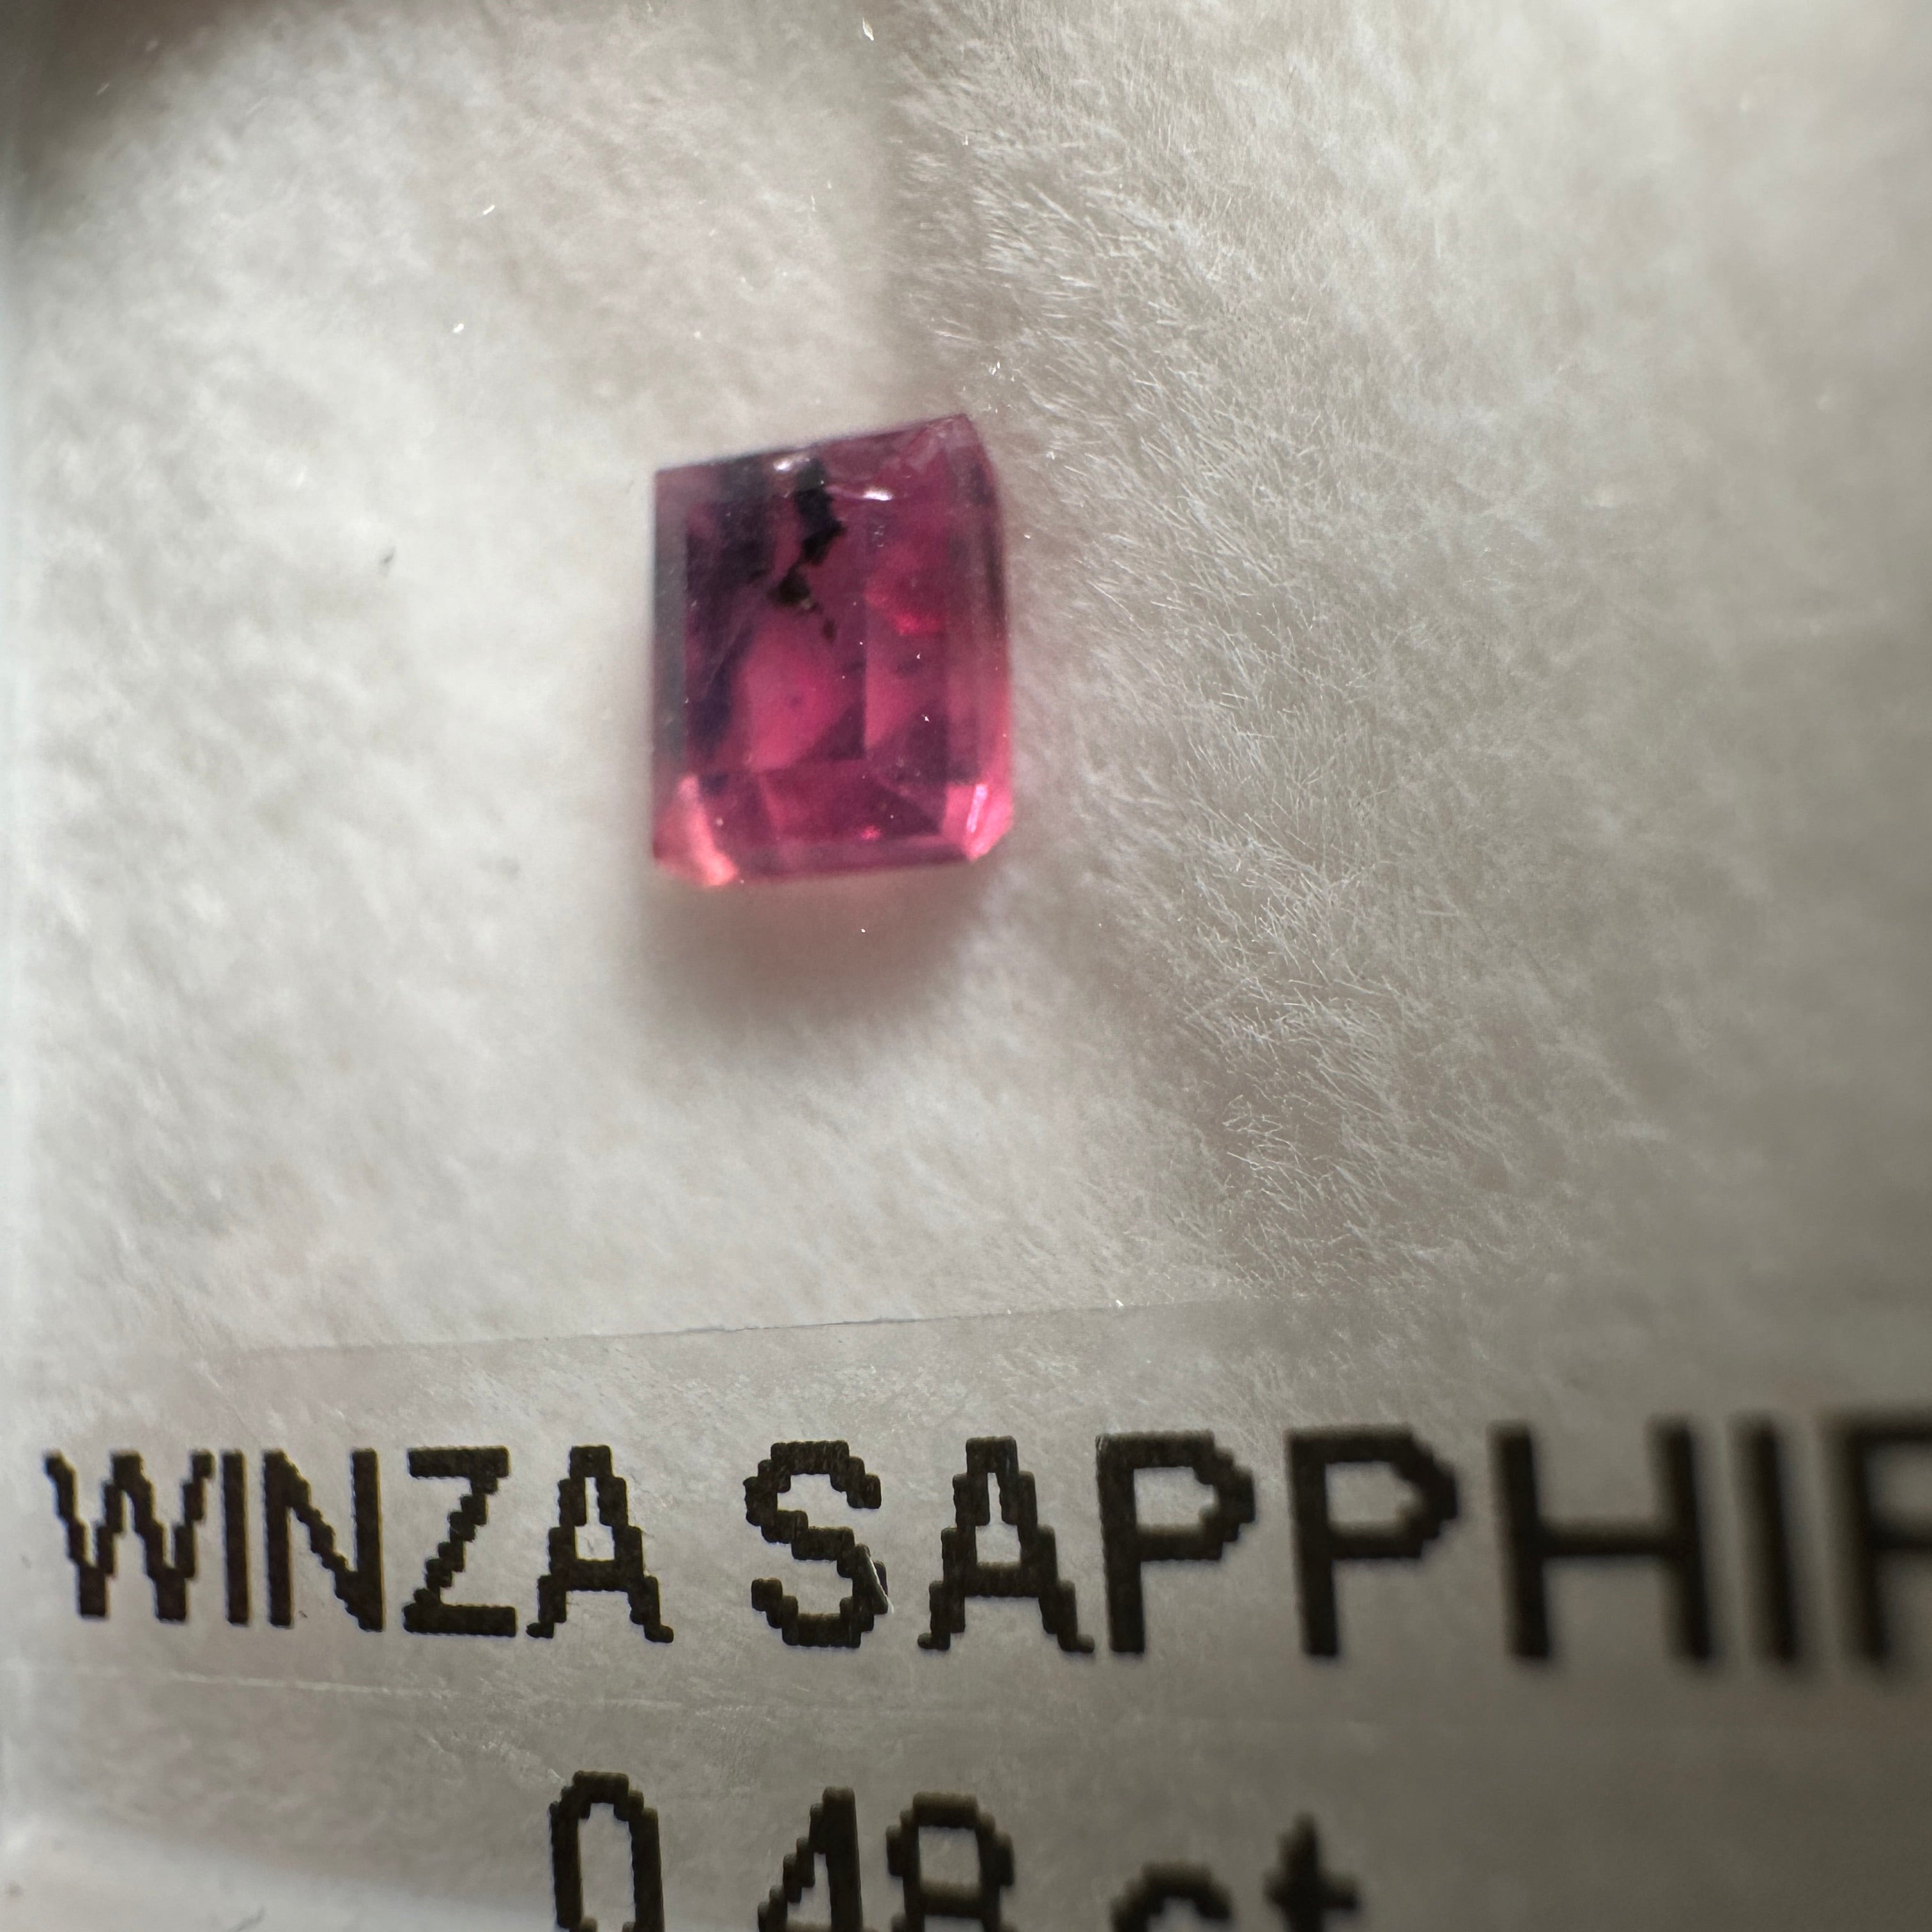 0.48ct Winza Sapphire, Tanzania, Untreated Unheated